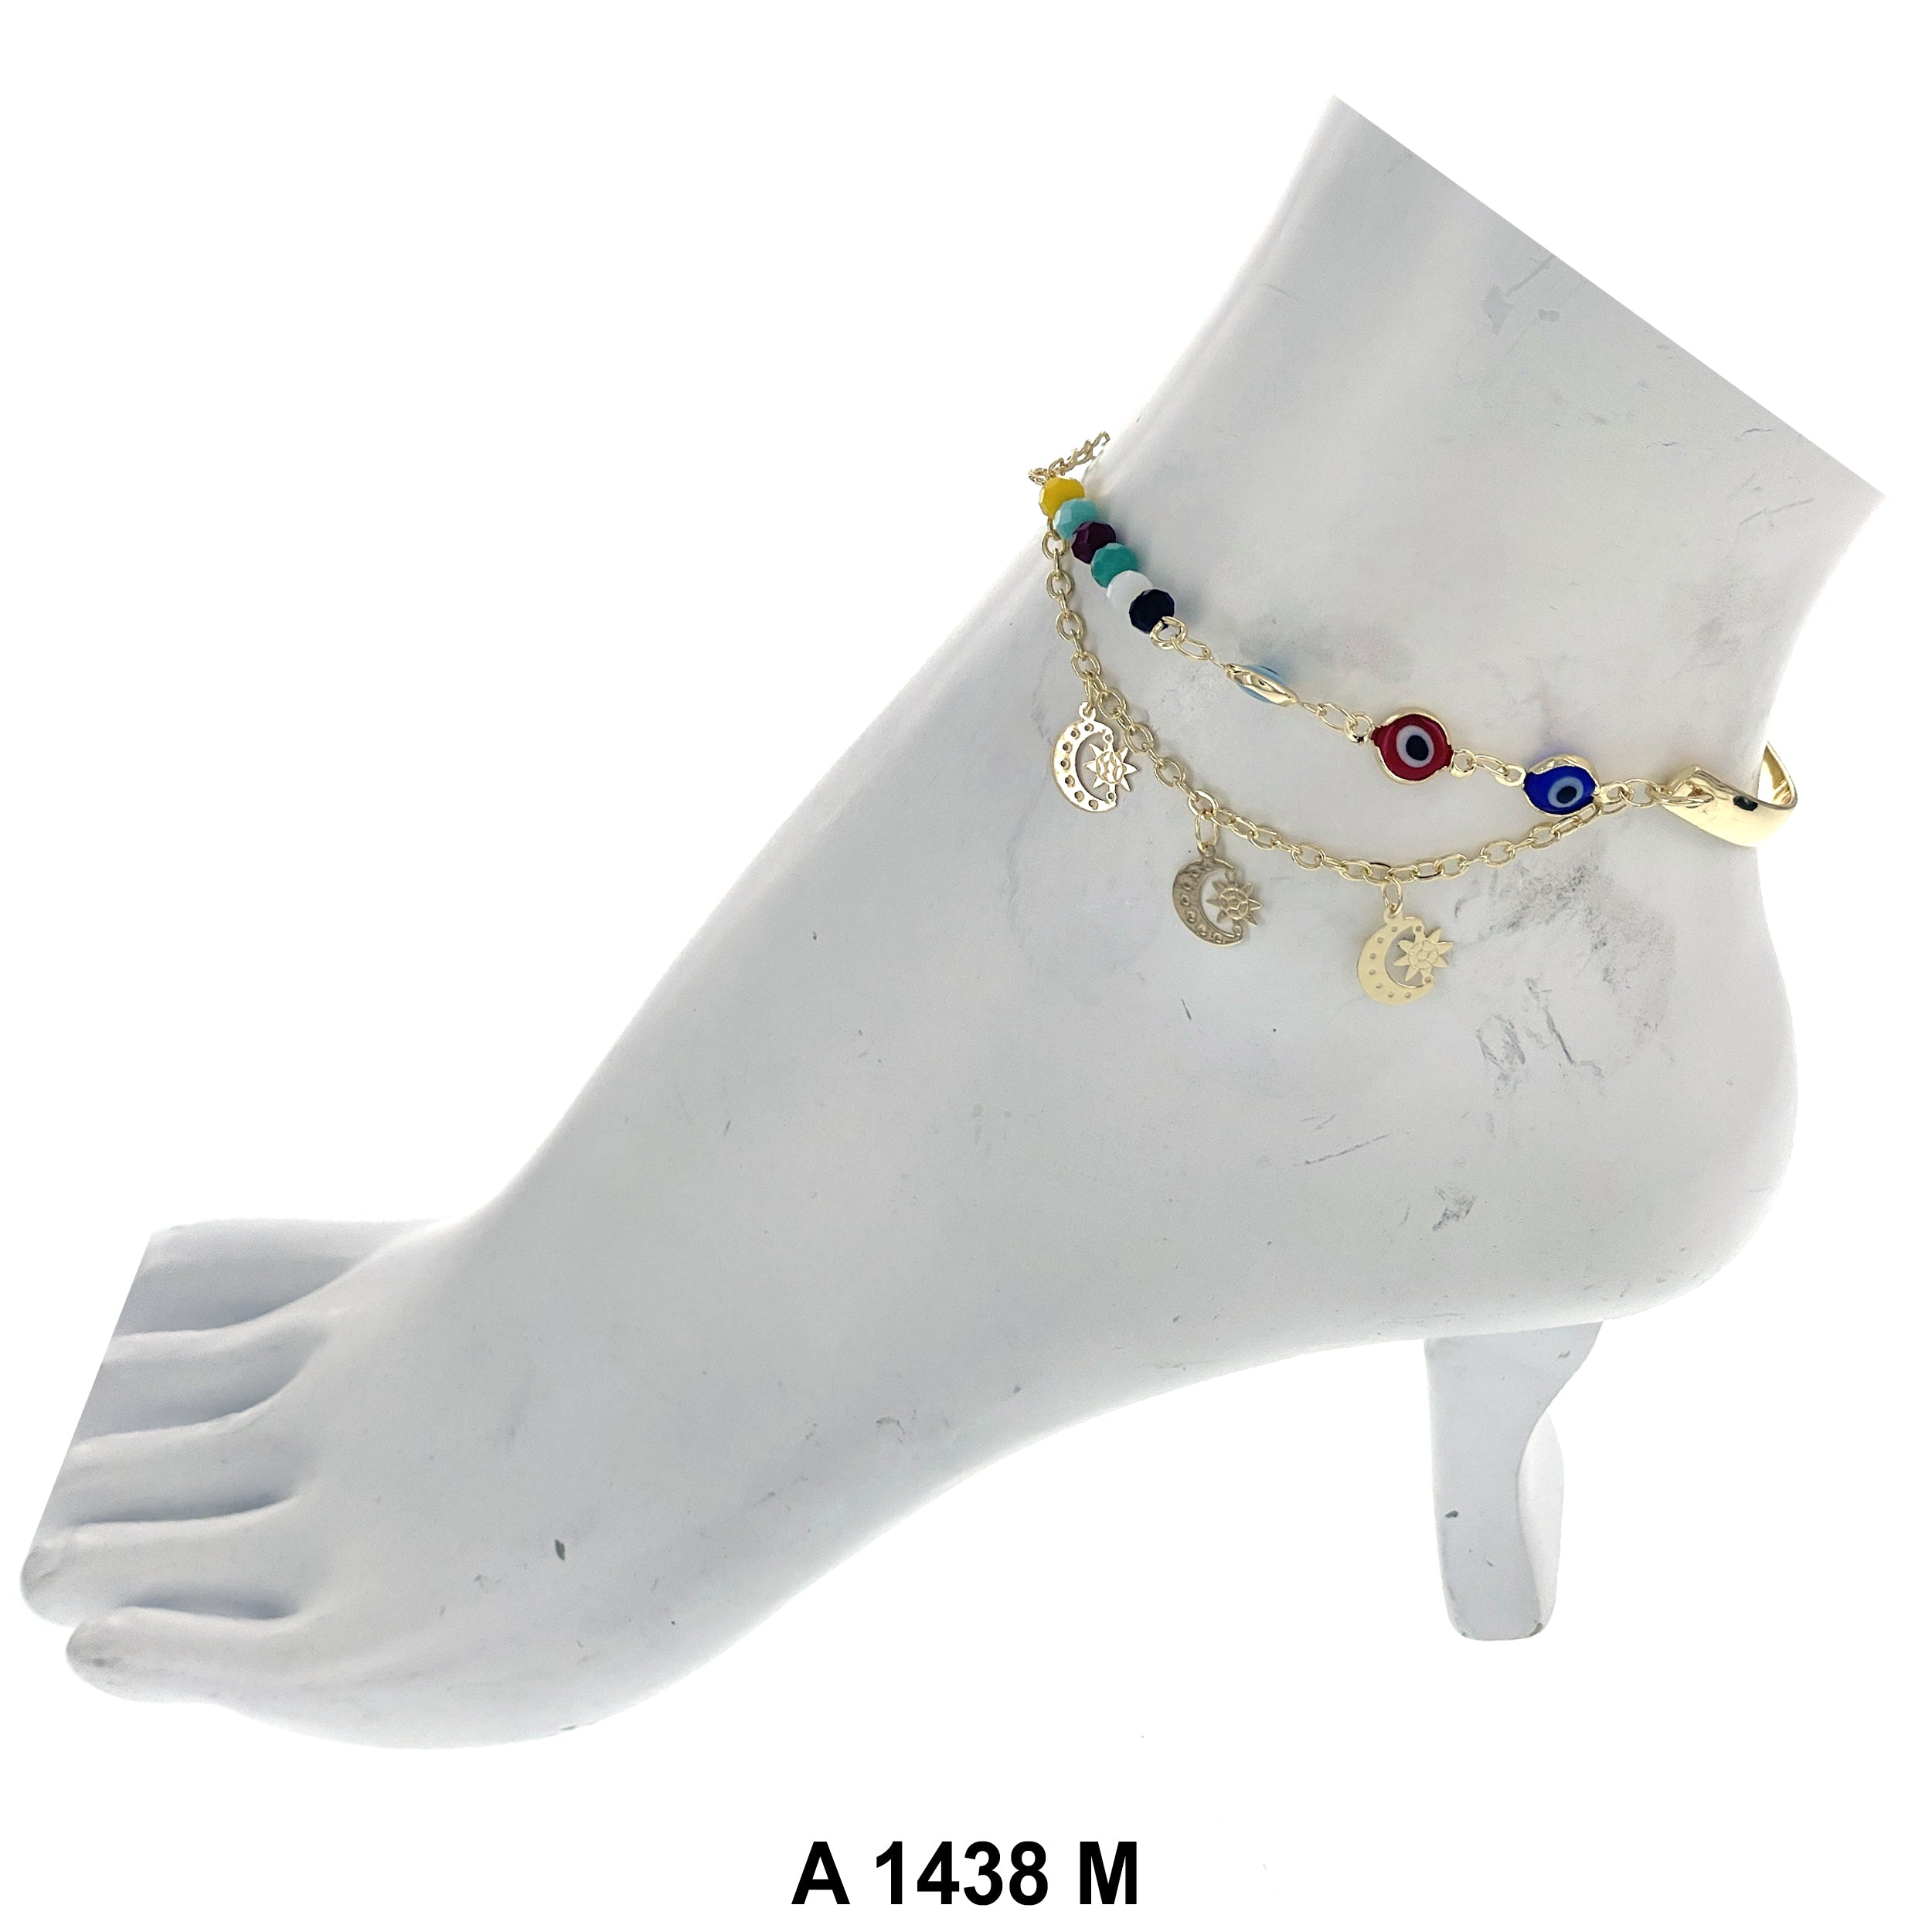 Fashion Anklets A 1438 M